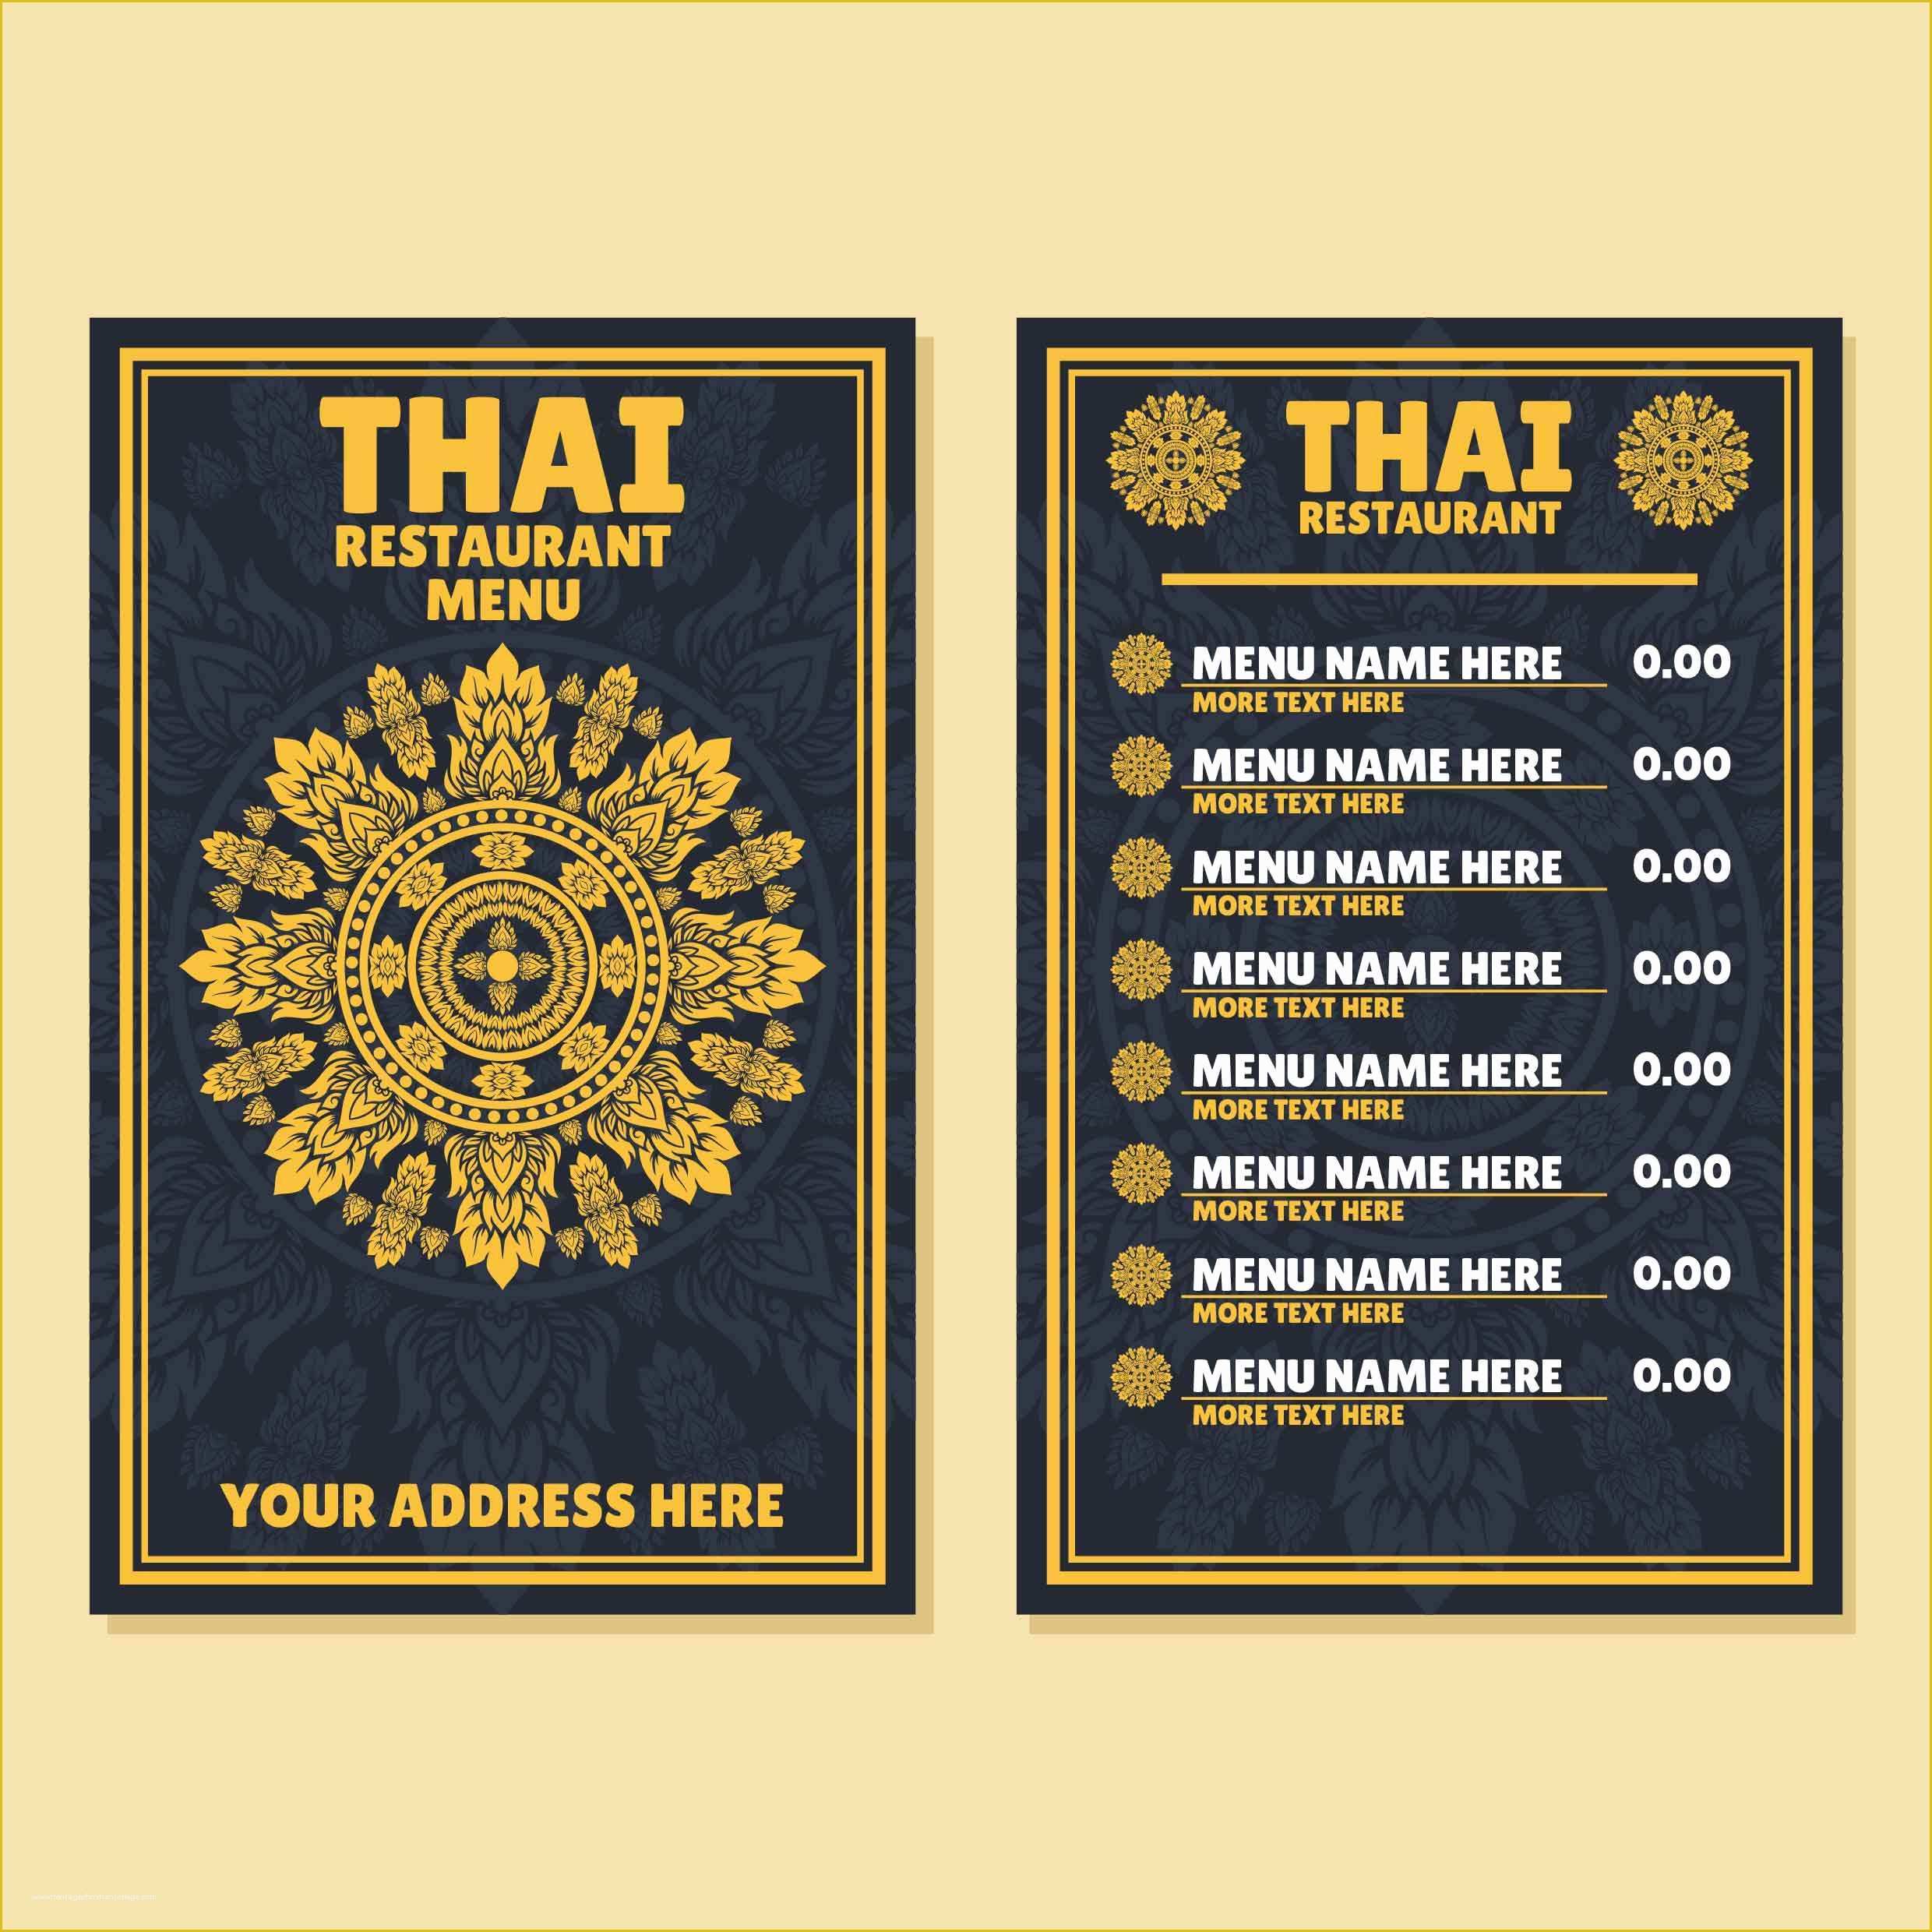 Thai Restaurant Menu Templates Free Of Thai Menu Template Download Free ...